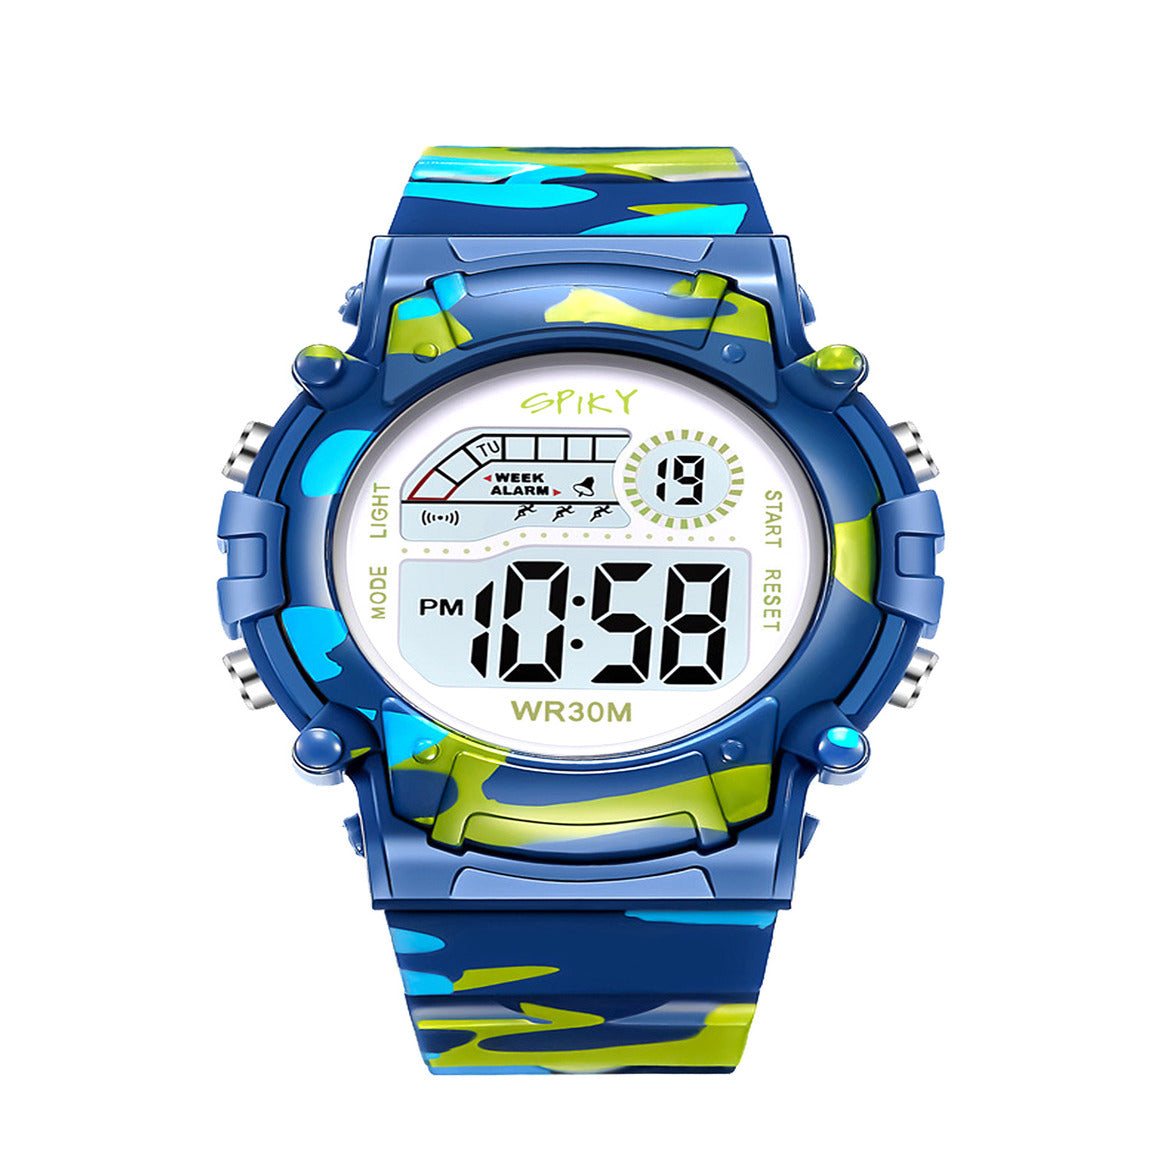 Spiky Military Digital Sports Watch - Blue